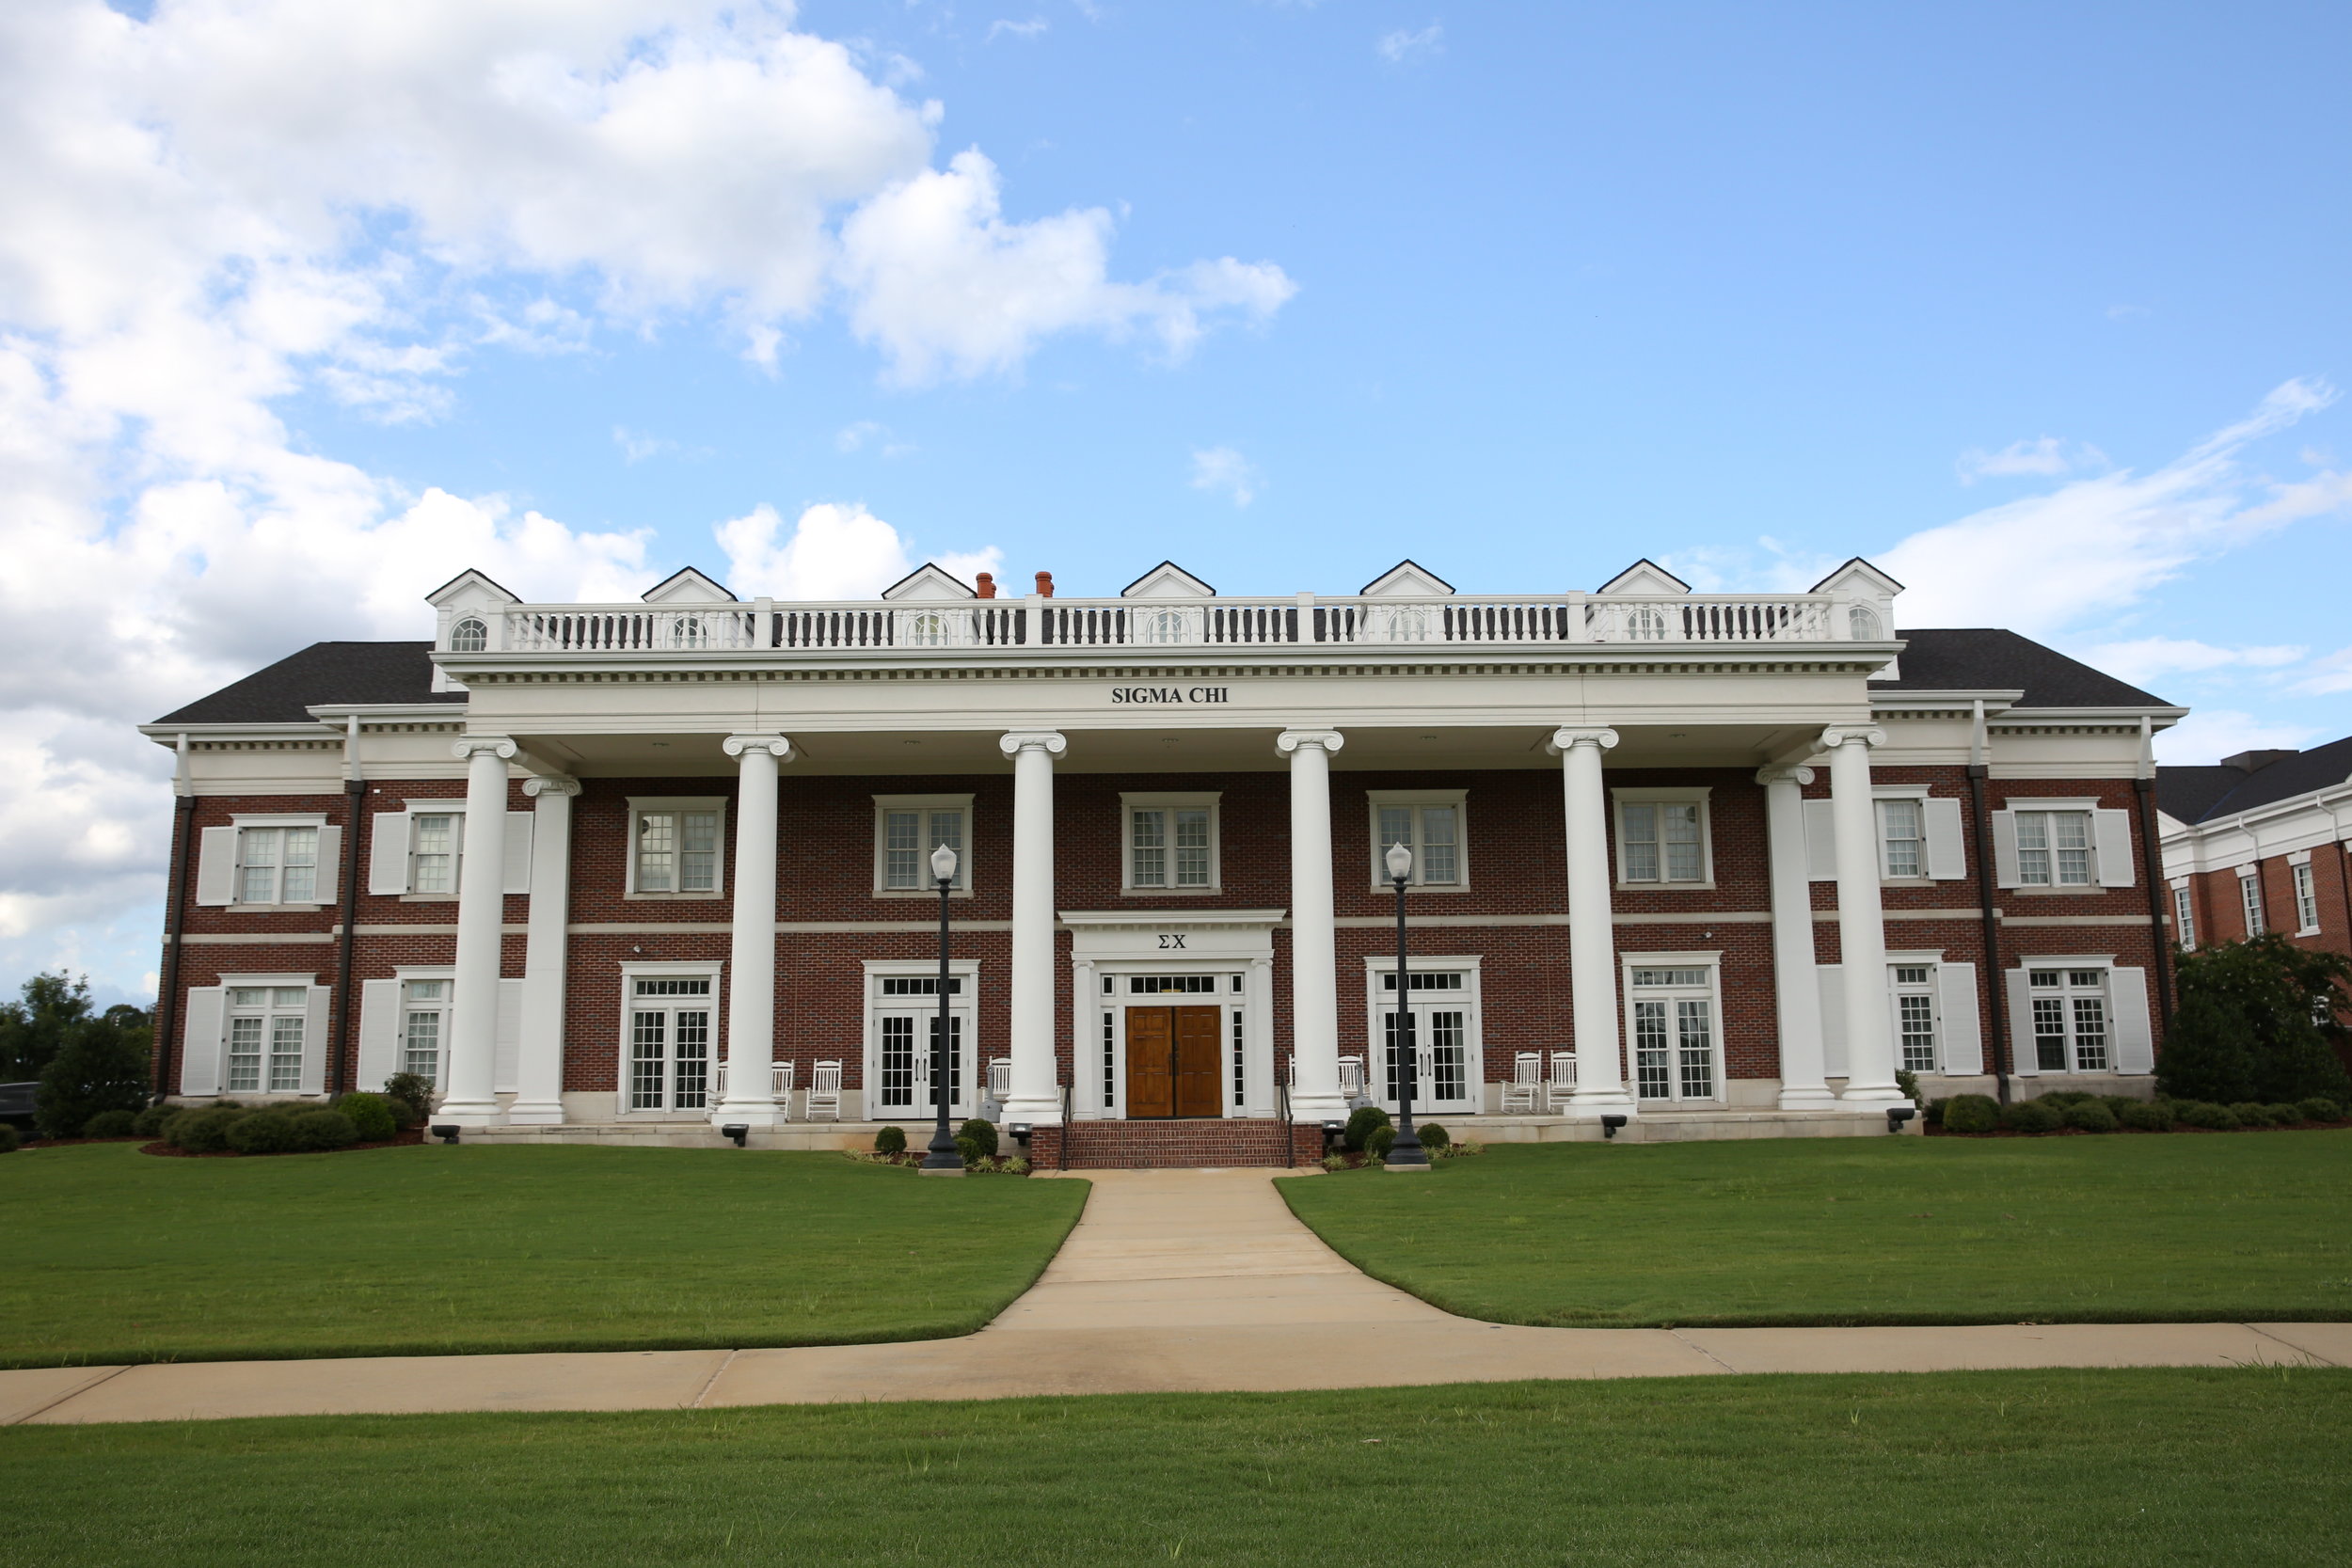  “Fraternity Row” at the University of Alabama showcase multimillion dollar Greek houses.  Photo by Sarah McClure  